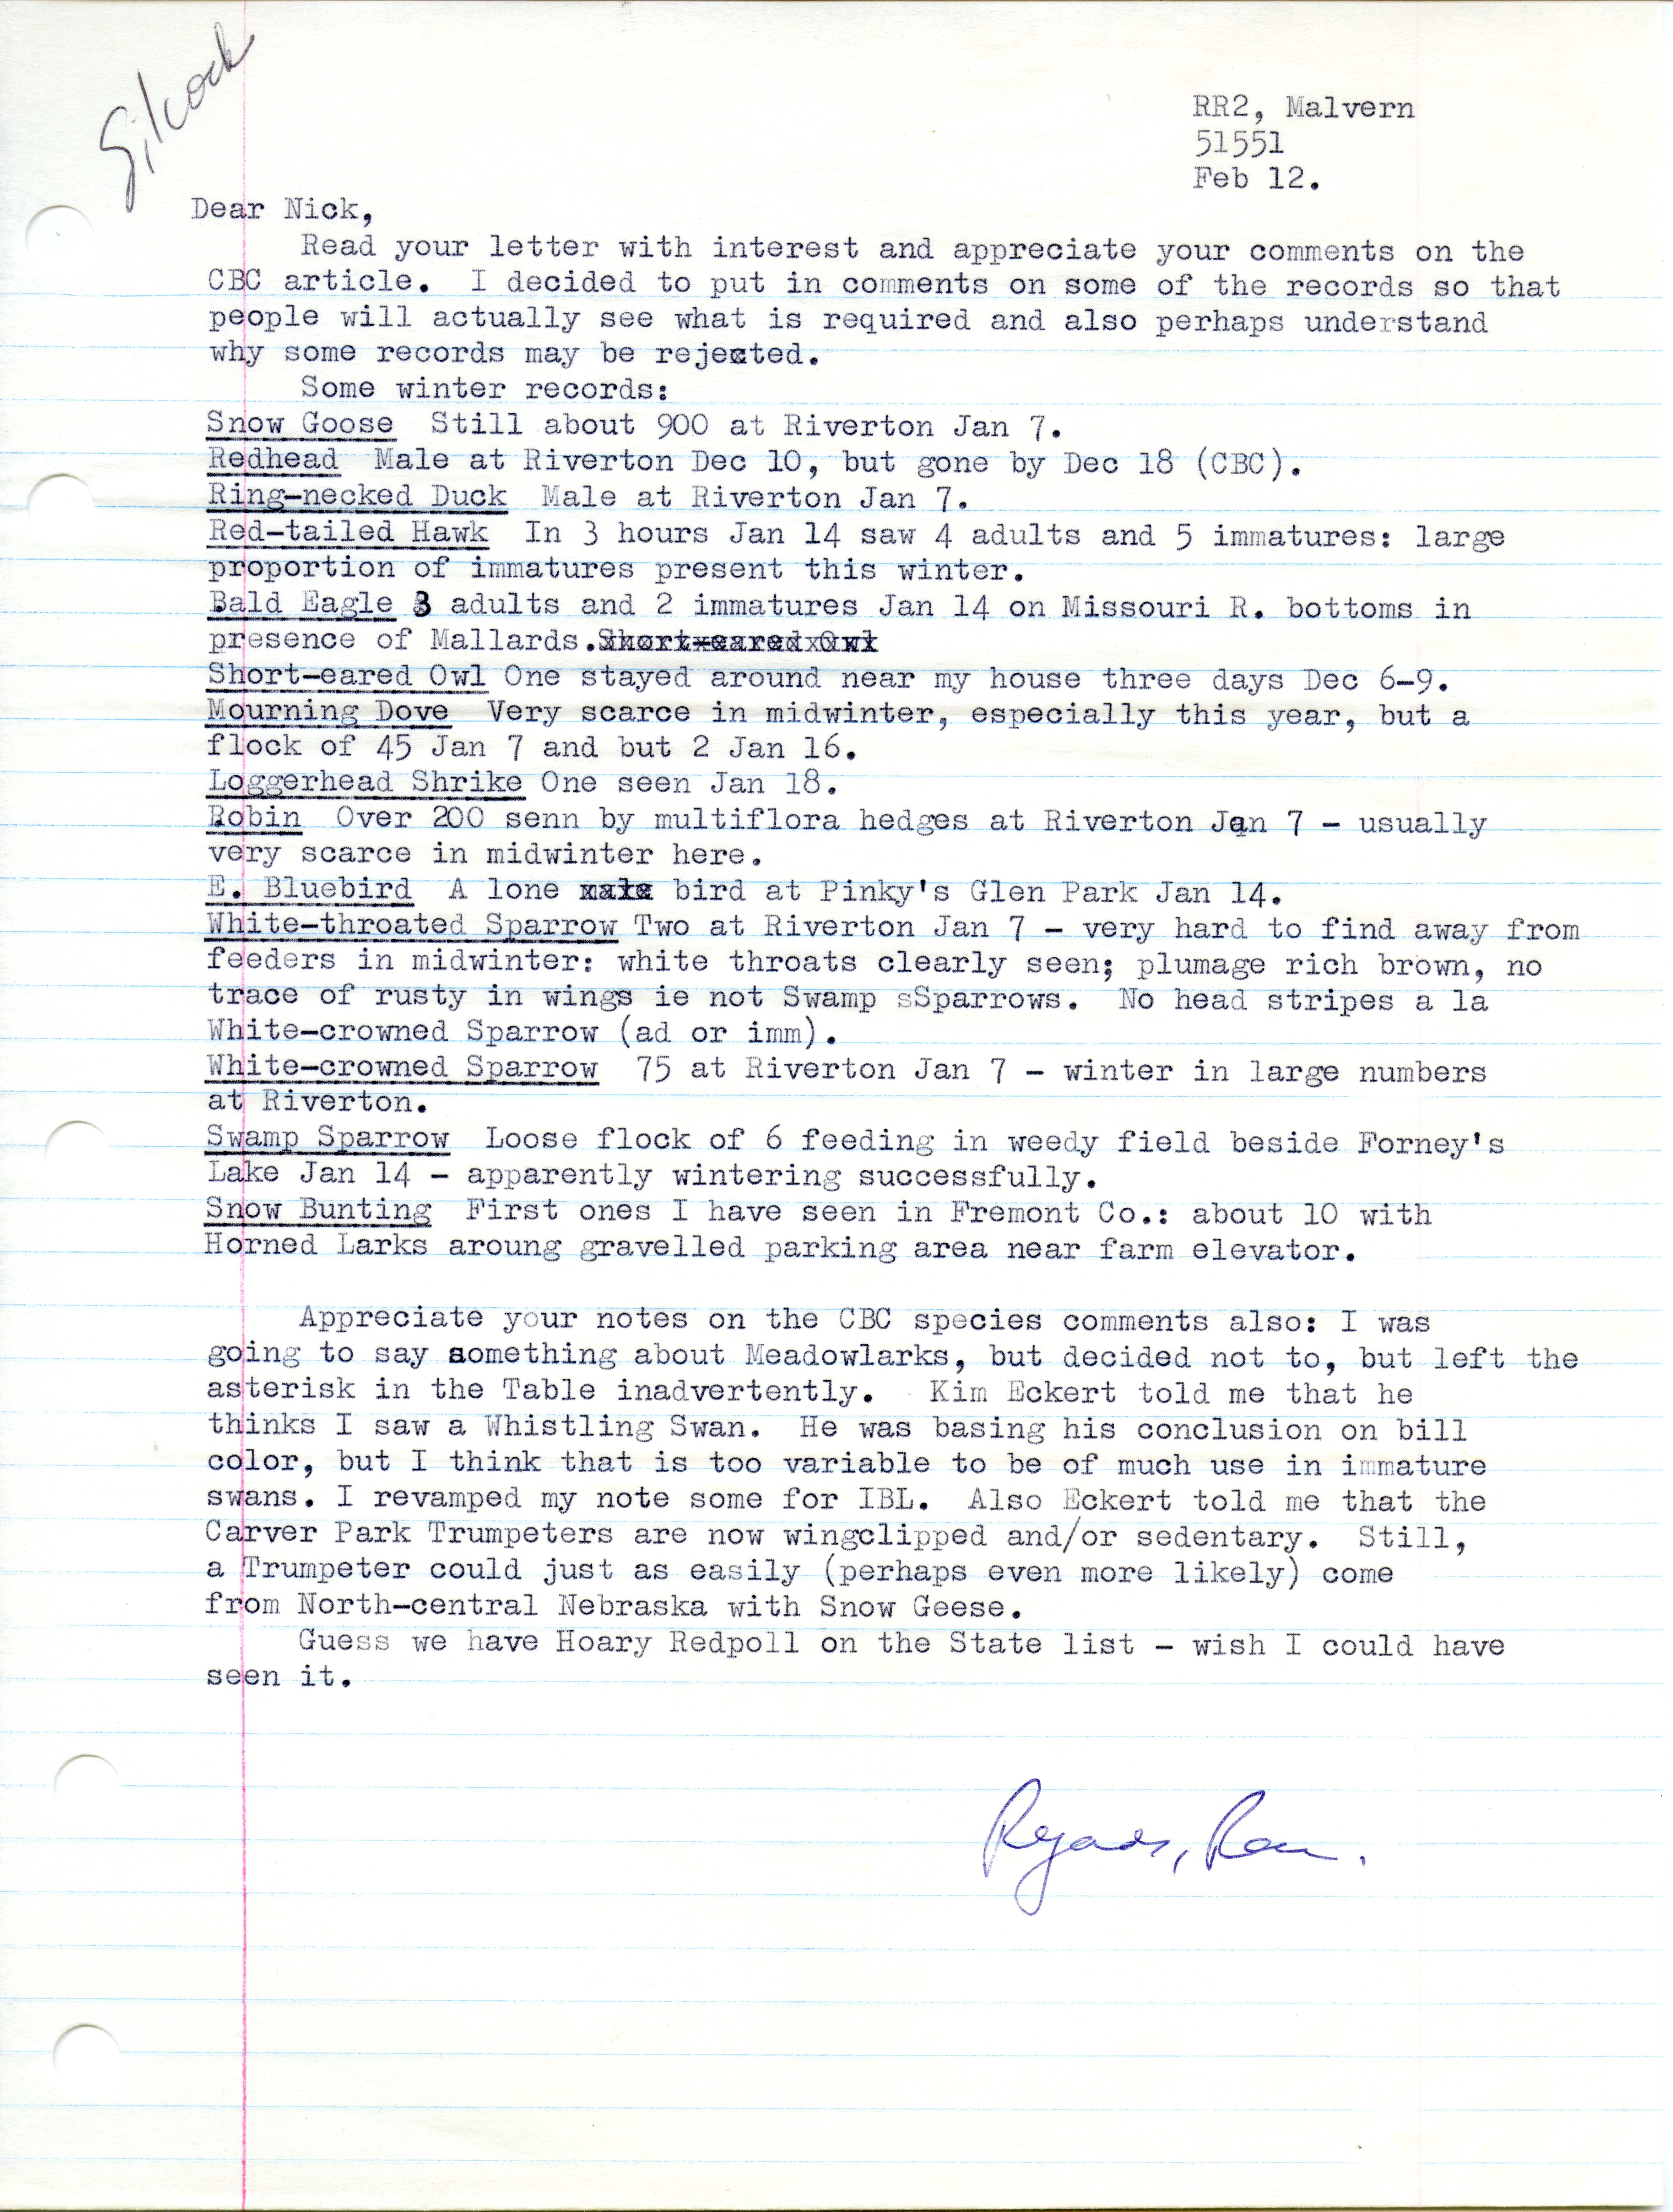 Ross W. Silcock letter to Nicholas S. Halmi regarding bird sightings, February 12, 1978